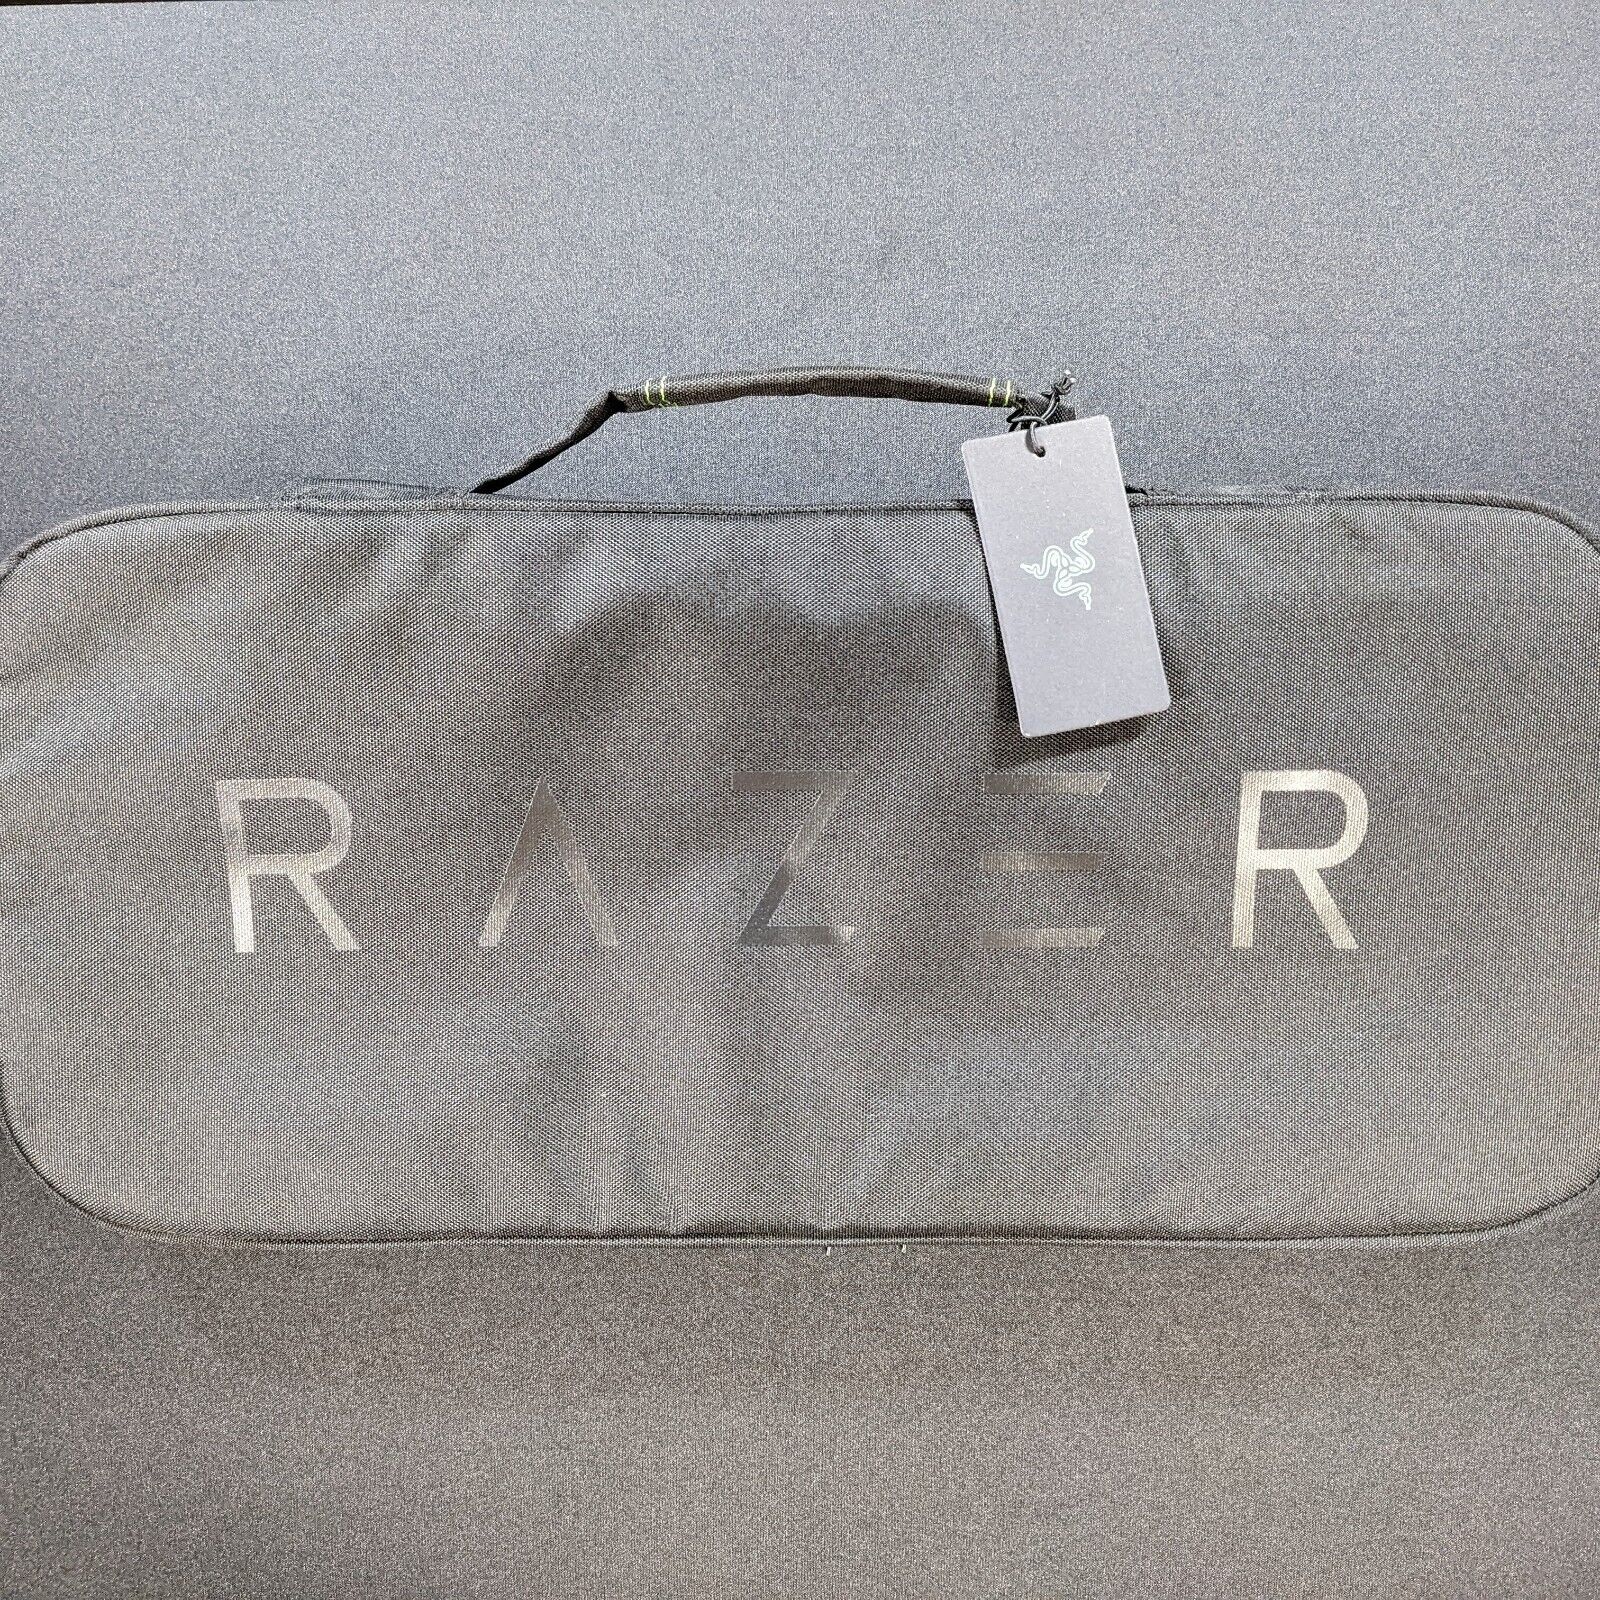 Razer Keyboard Bag V2 Full Size Keyboard Carrying Case